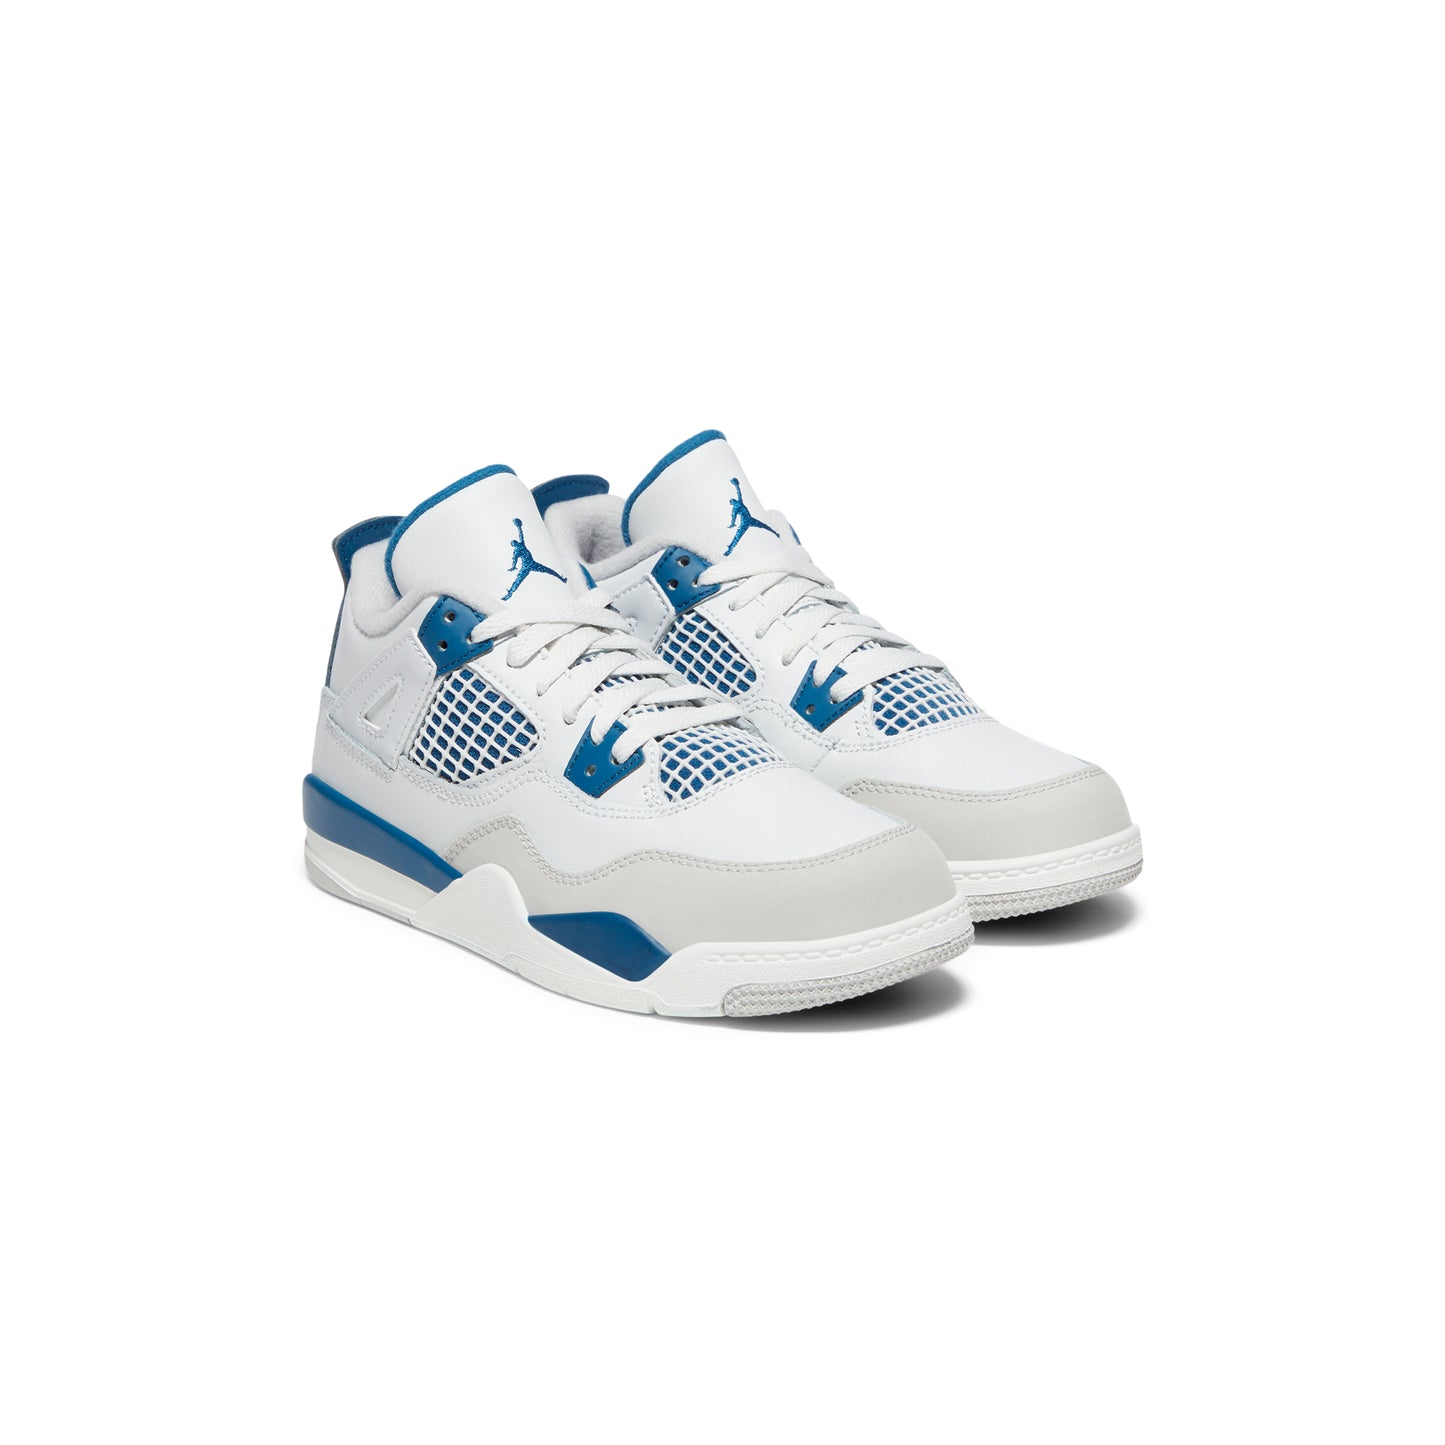 Nike Kids TD Air Jordan 4 Retro (Off White/Military Blue/Neutral Grey)